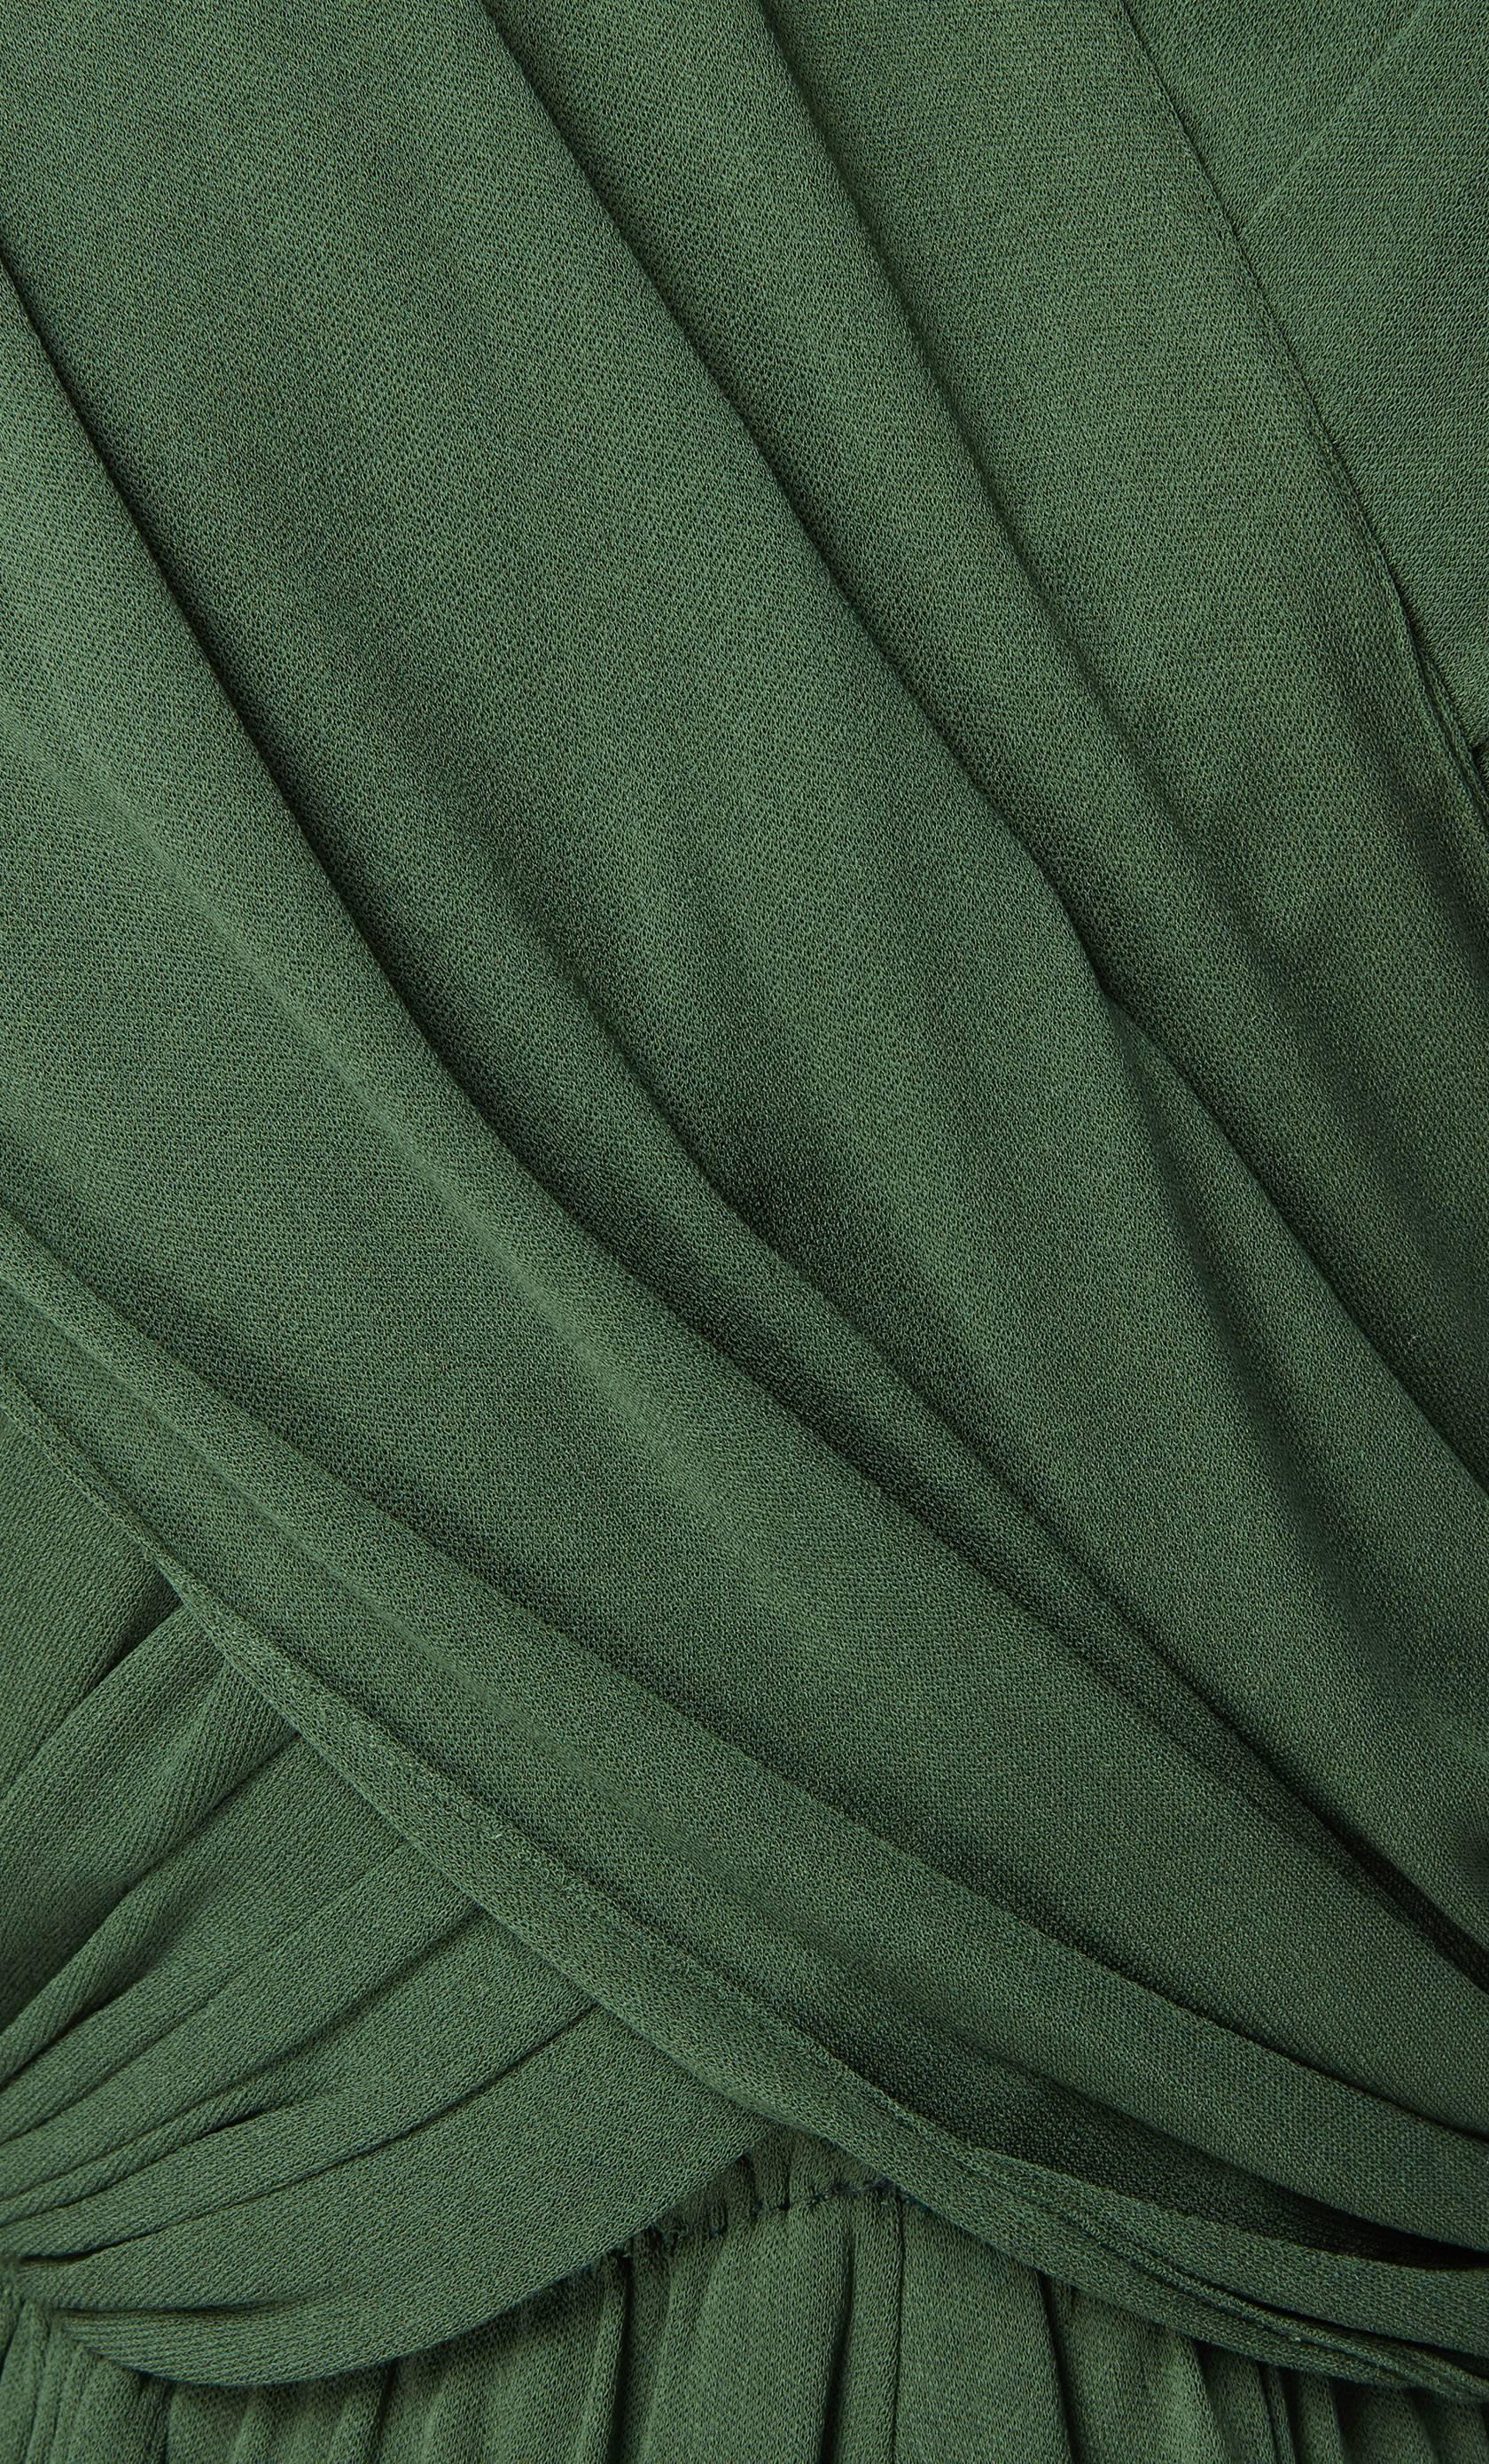 Women's Madame Grès haute couture green dress, circa 1945